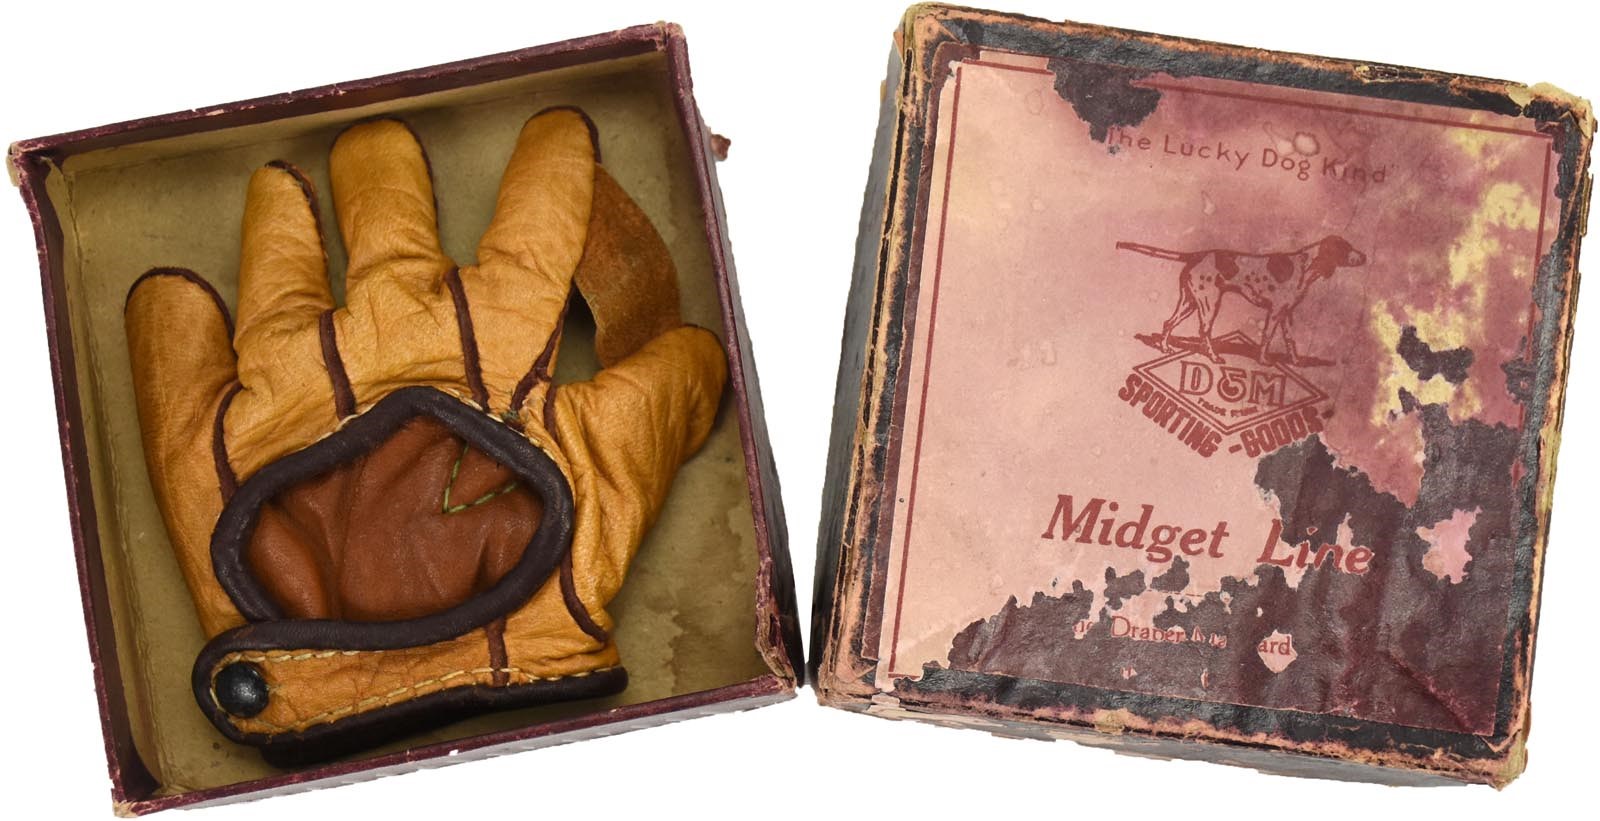 Best of the Best - 1930 "Midget Line" Draper & Maynard Salesman's Sample Baseball Glove in Box